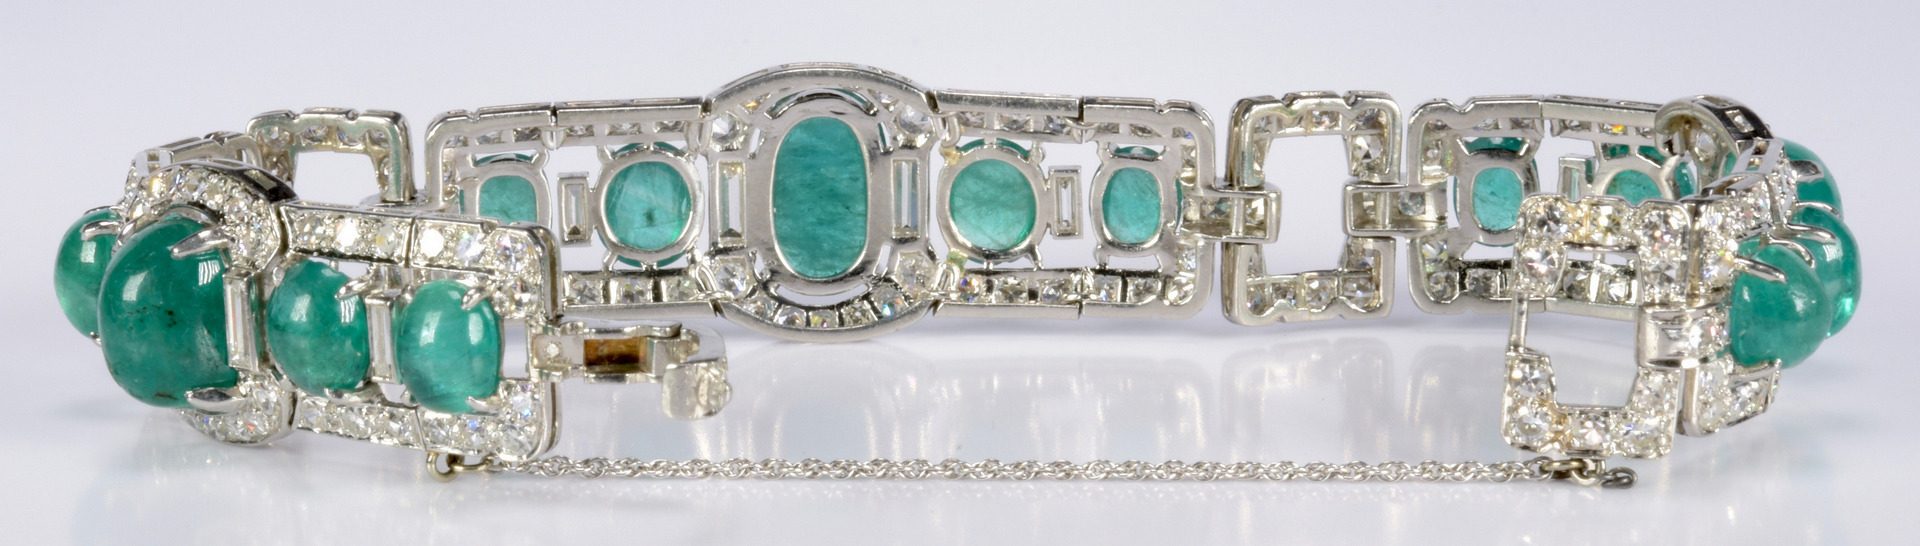 Lot 401: Art Deco Emerald and Diamond Bracelet